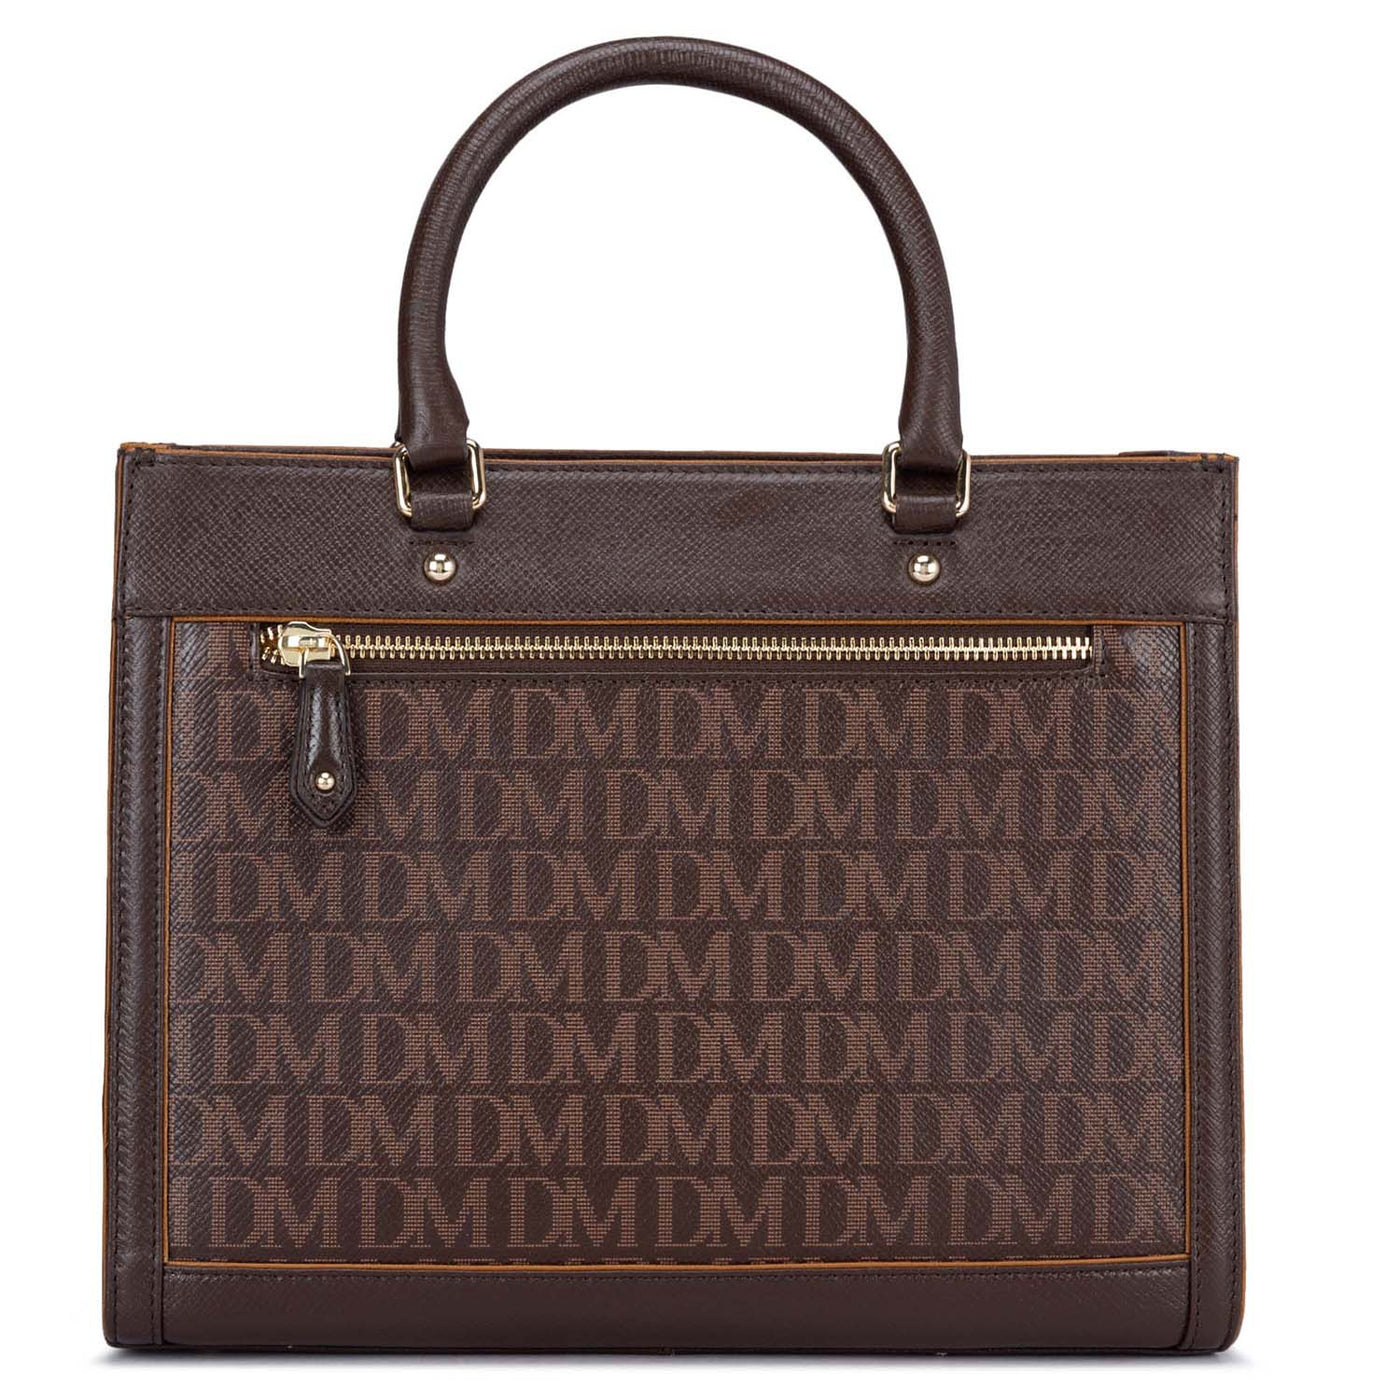 OROTON Brown Monogram Fabric Large Leather Bag Shoulder Handbag C24 | eBay